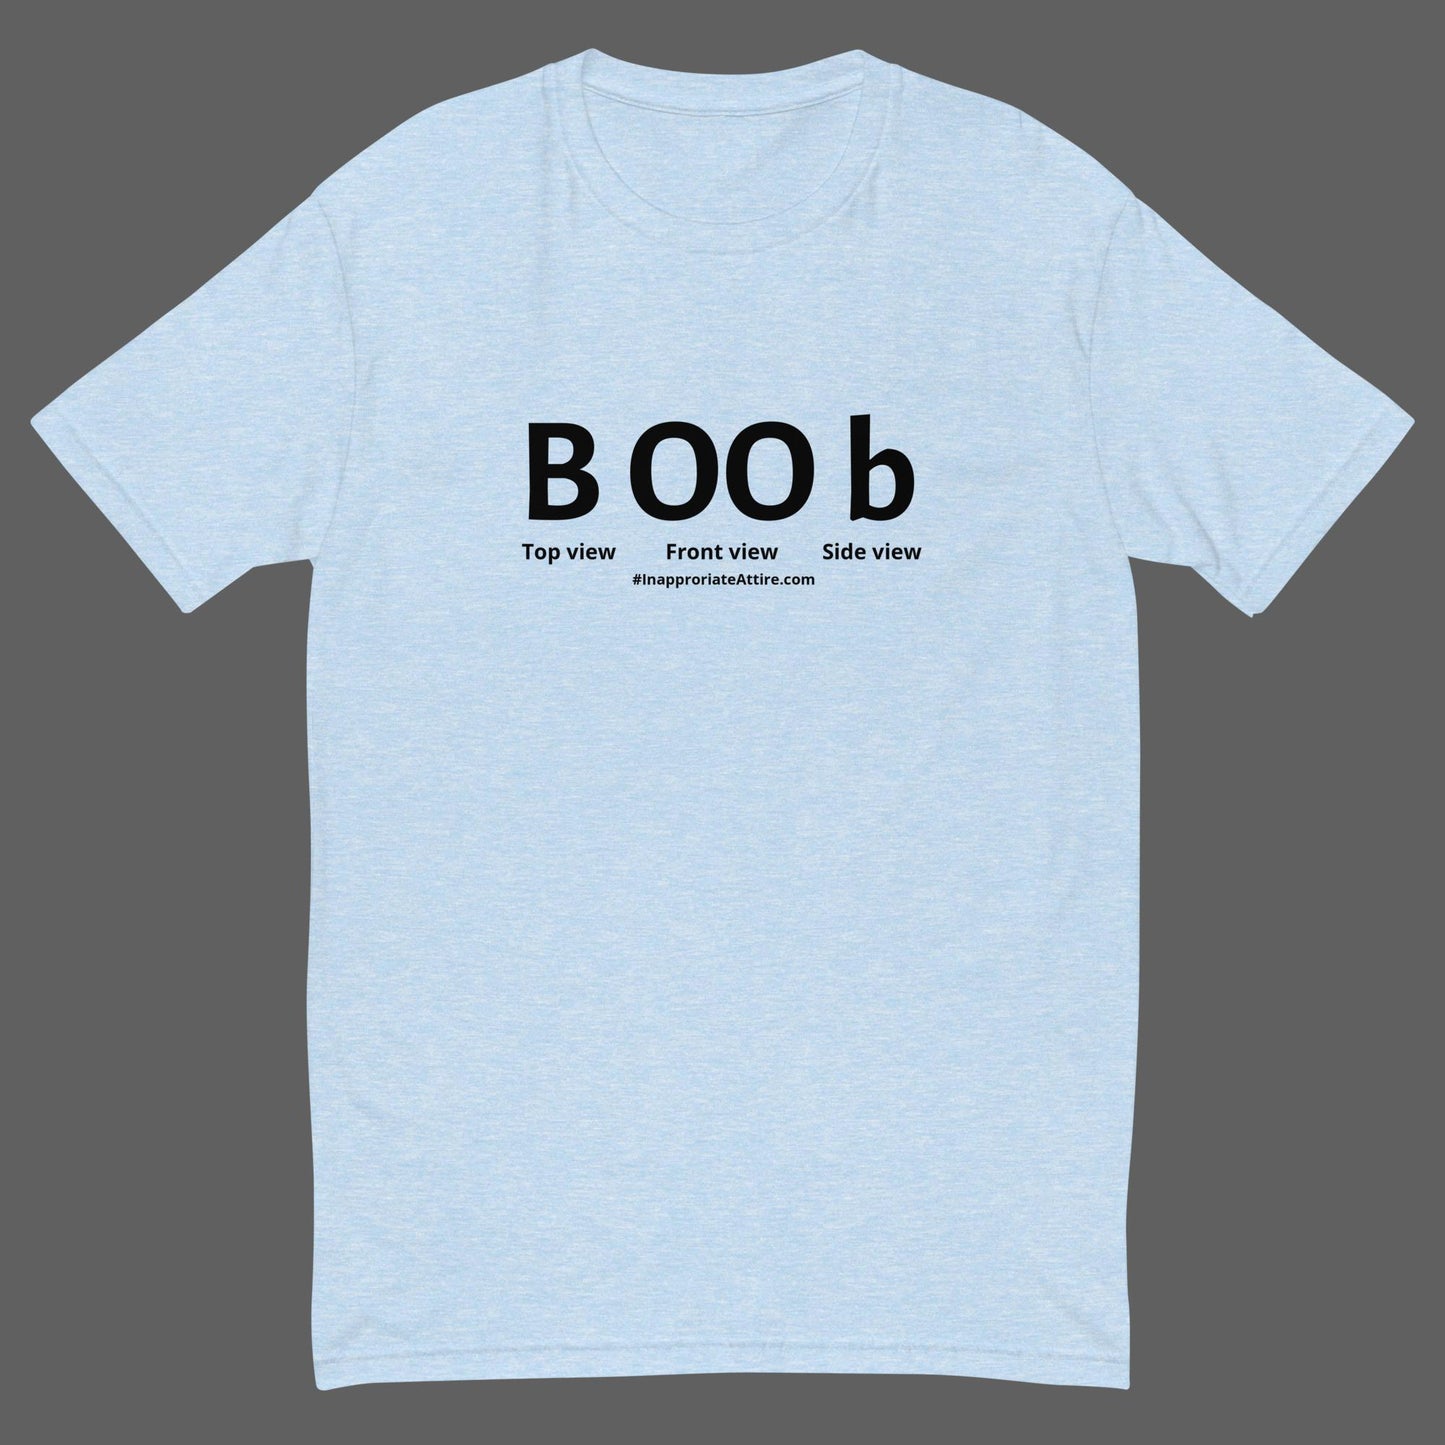 Boob view T-shirt